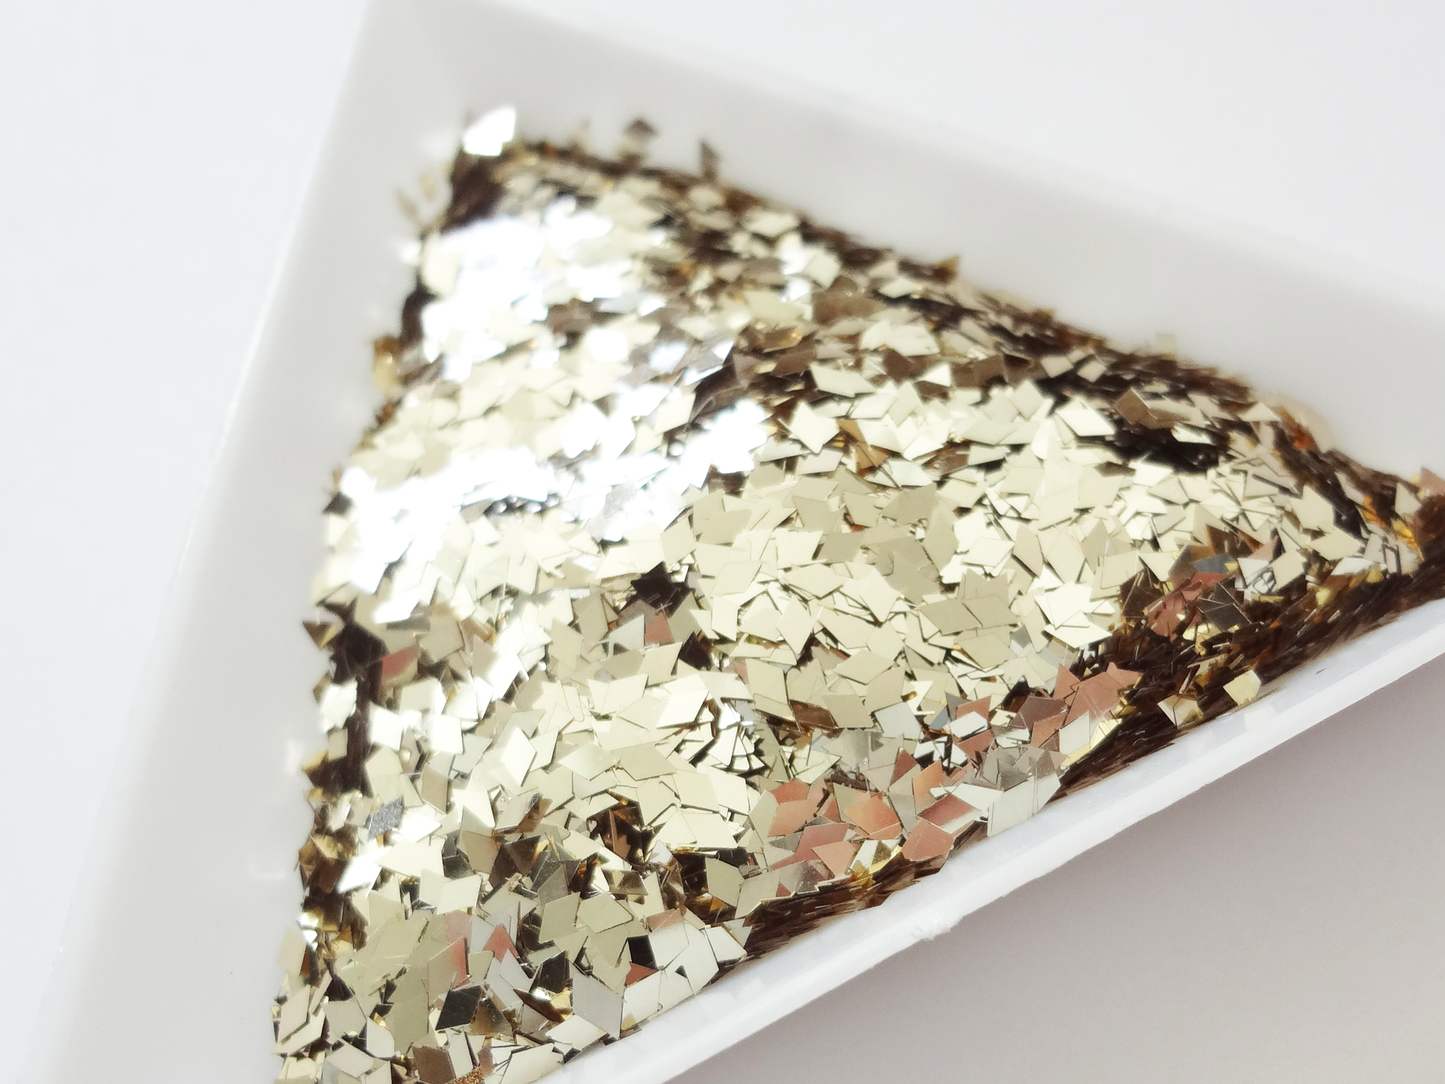 Platinum Blond Gold Diamond Shape Glitter, 3x1.5mm, Solvent Resistant Glitter